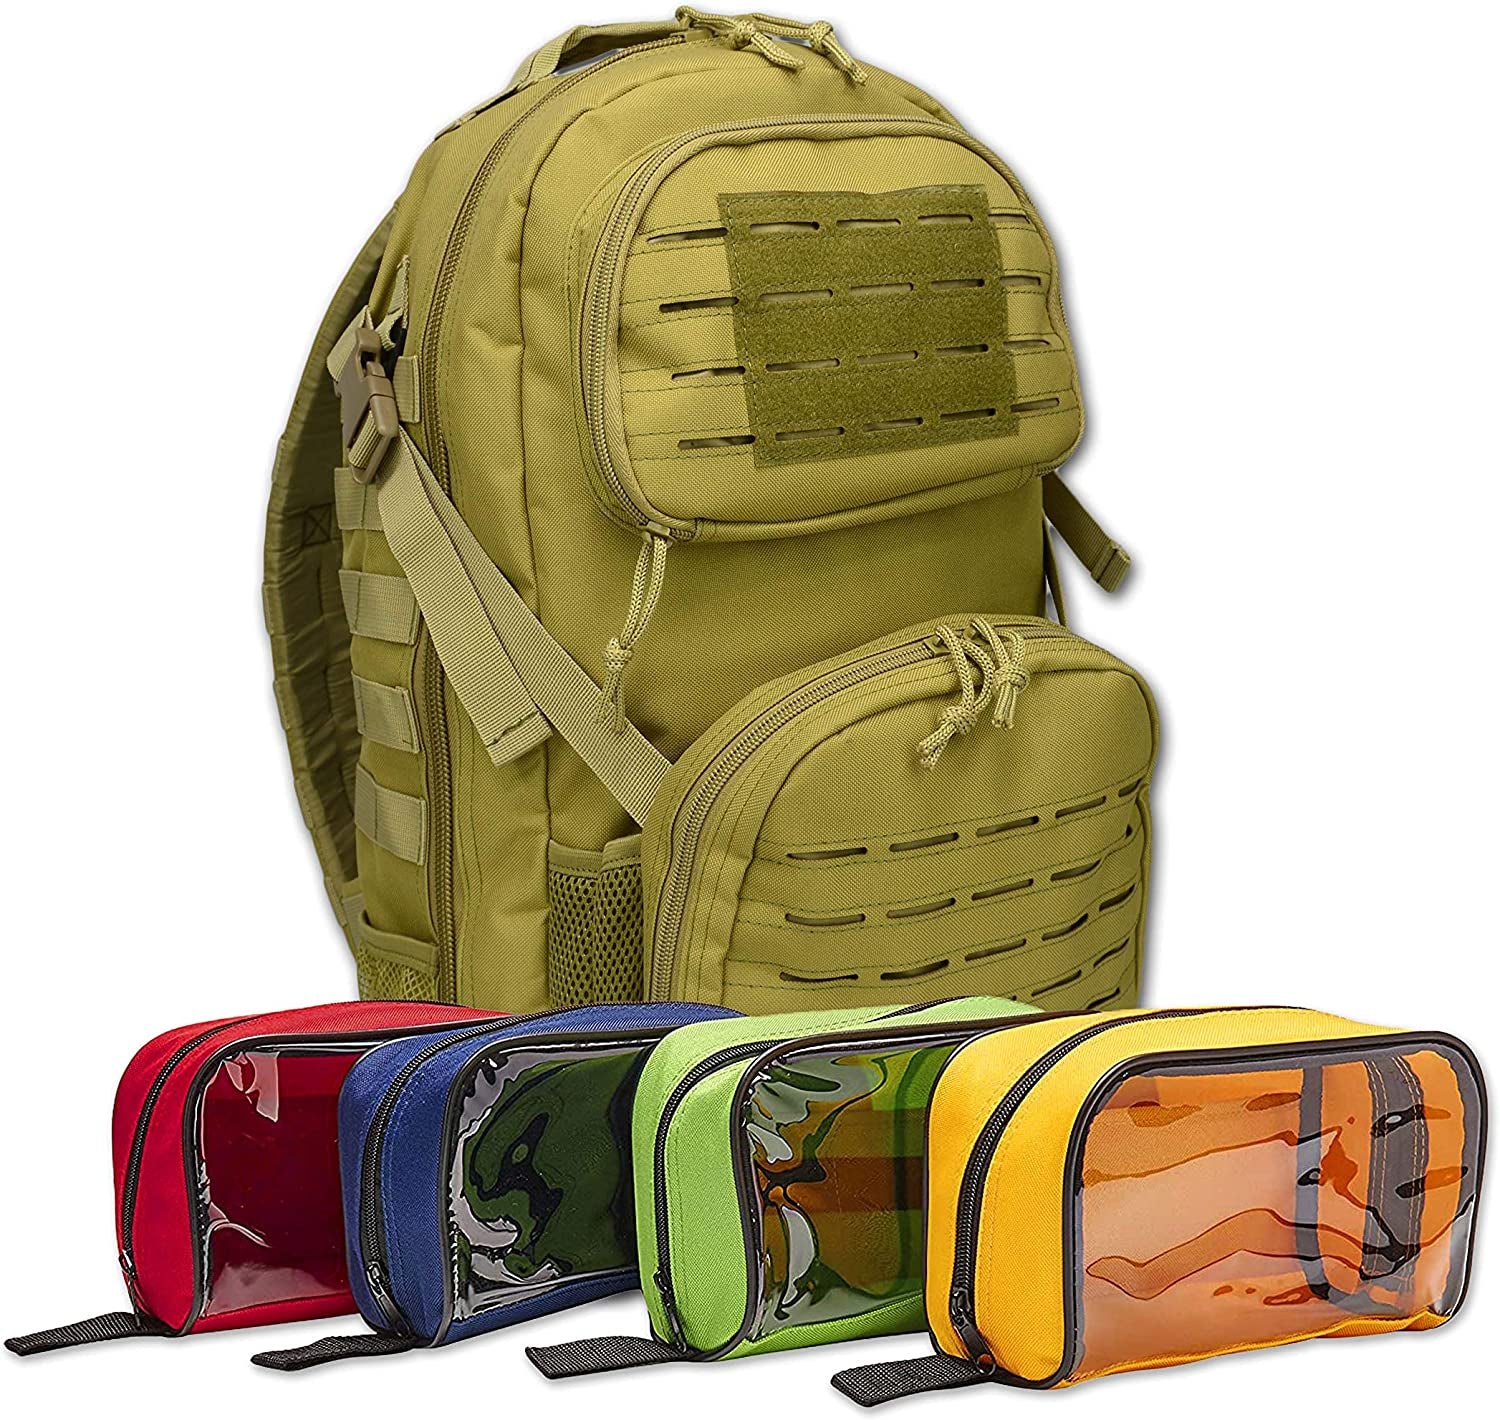 Lightning X Stocked Tactical EMT Trauma First Responder Medical Kit Backpack Desert Tan Hydration Bladder